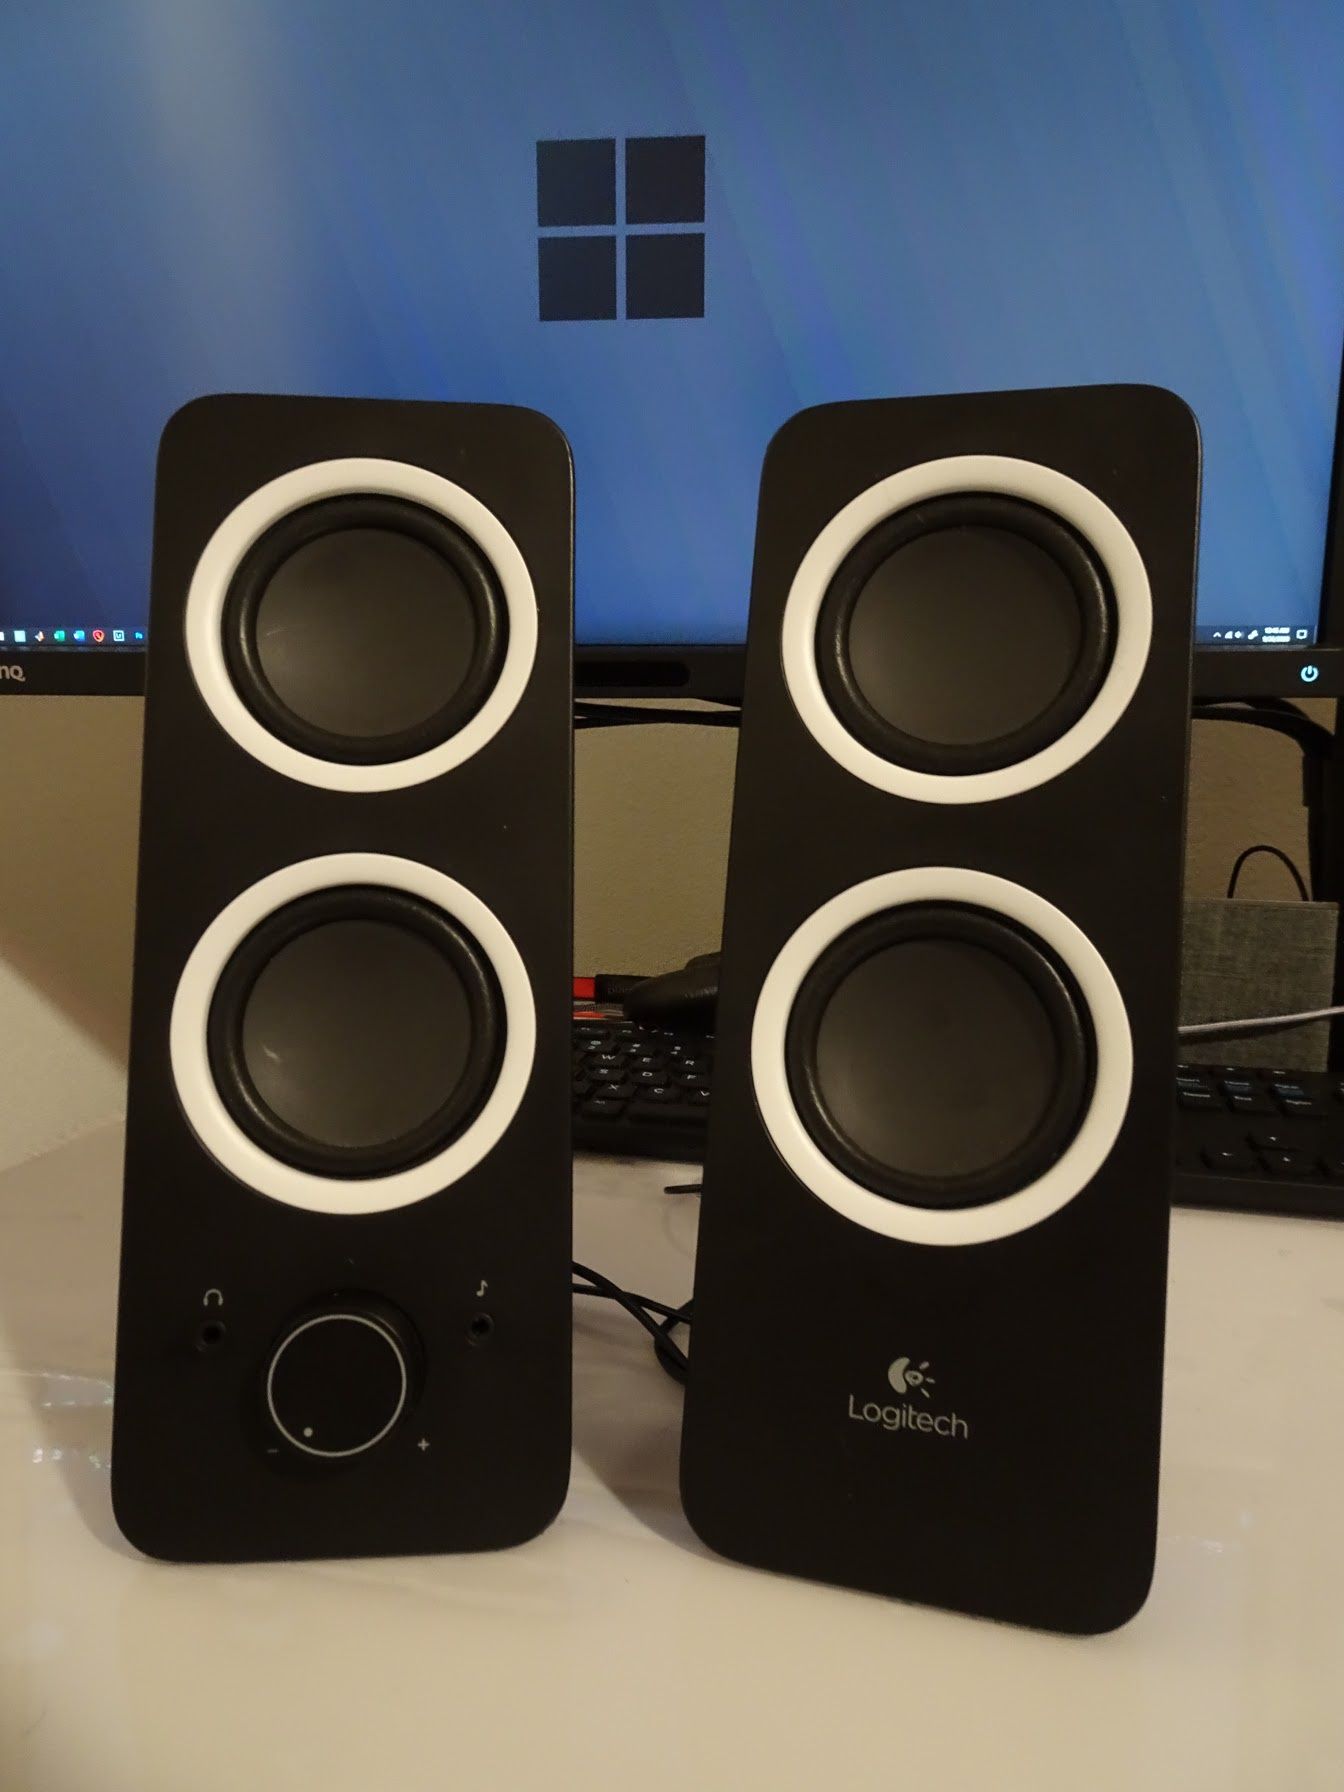 Logitech stylish elegant speakers great sound quality